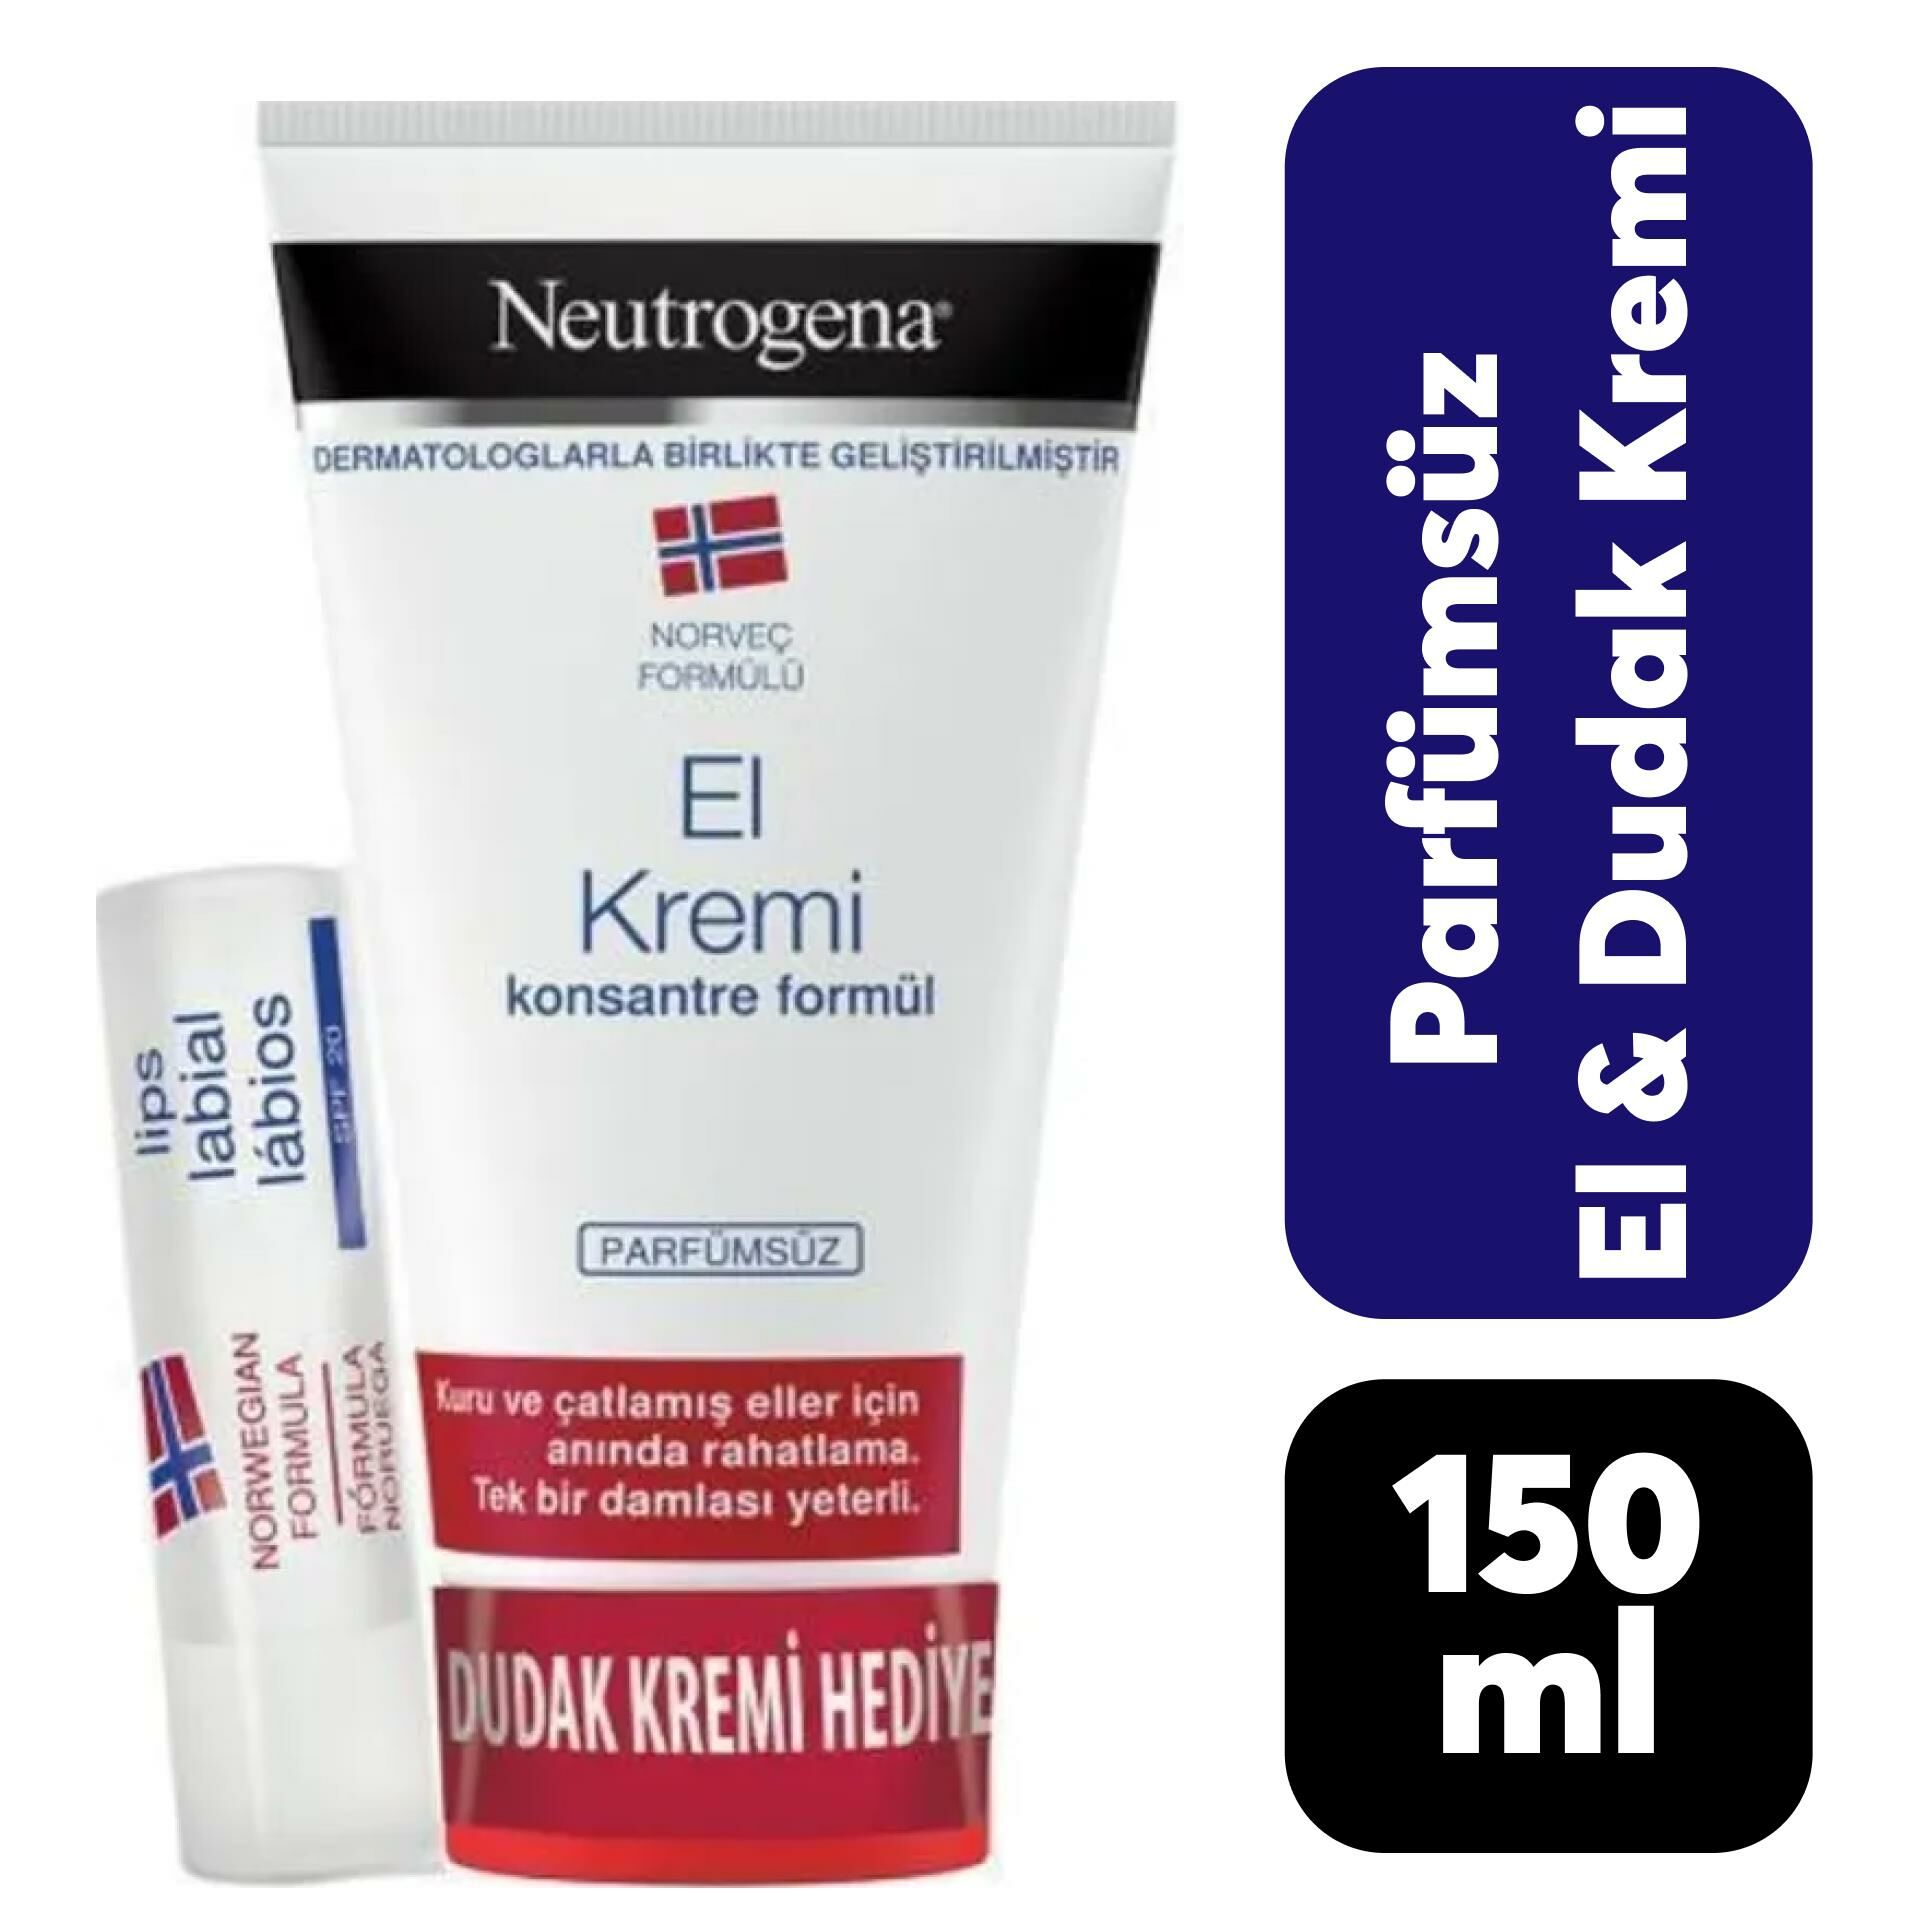 Neutrogena El Kremi 75 ml Parfümsüz + Dudak Kremi